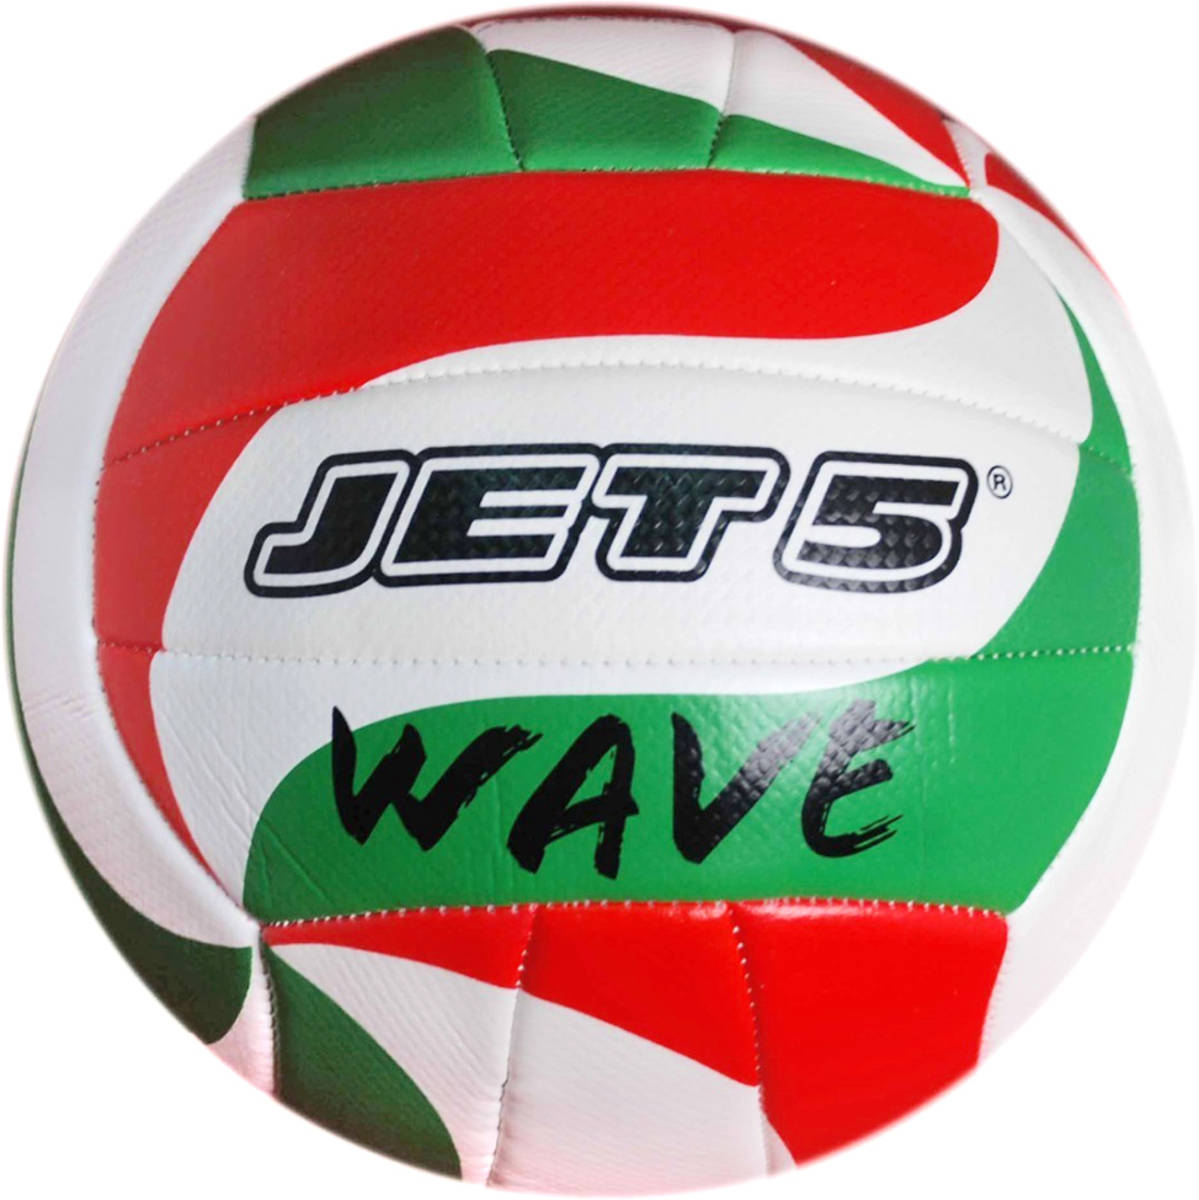 Míč volejbalový balón Jet 5 Wave vel. 5 volleyball